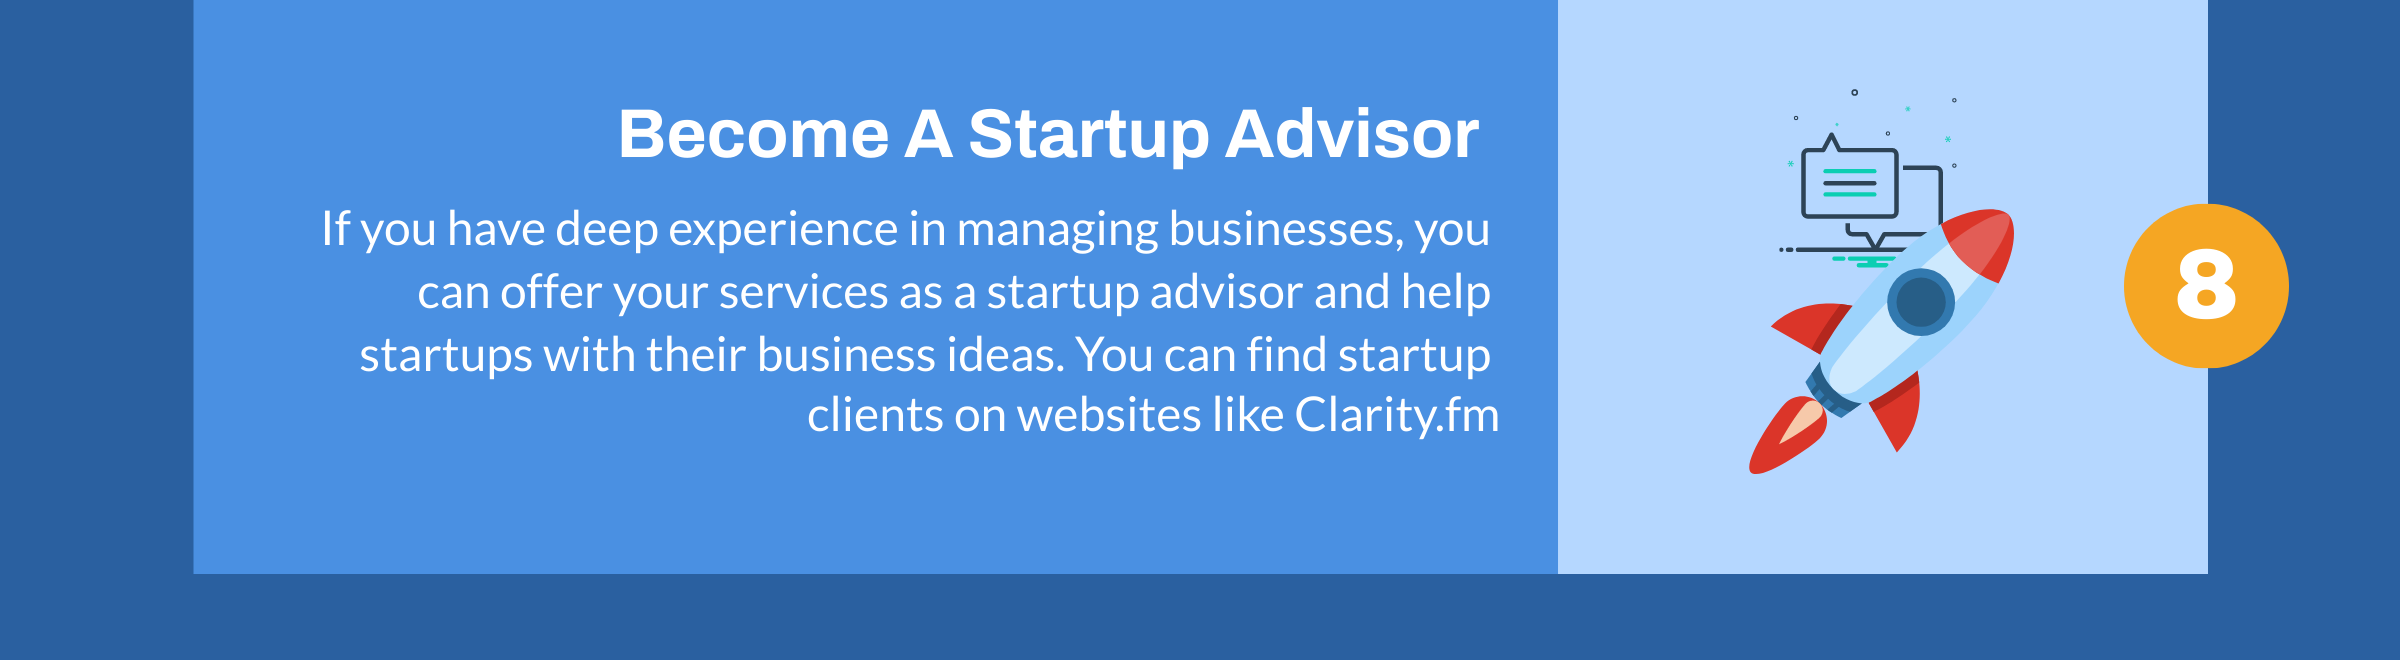 Ryhdy Startup Advisoriksi